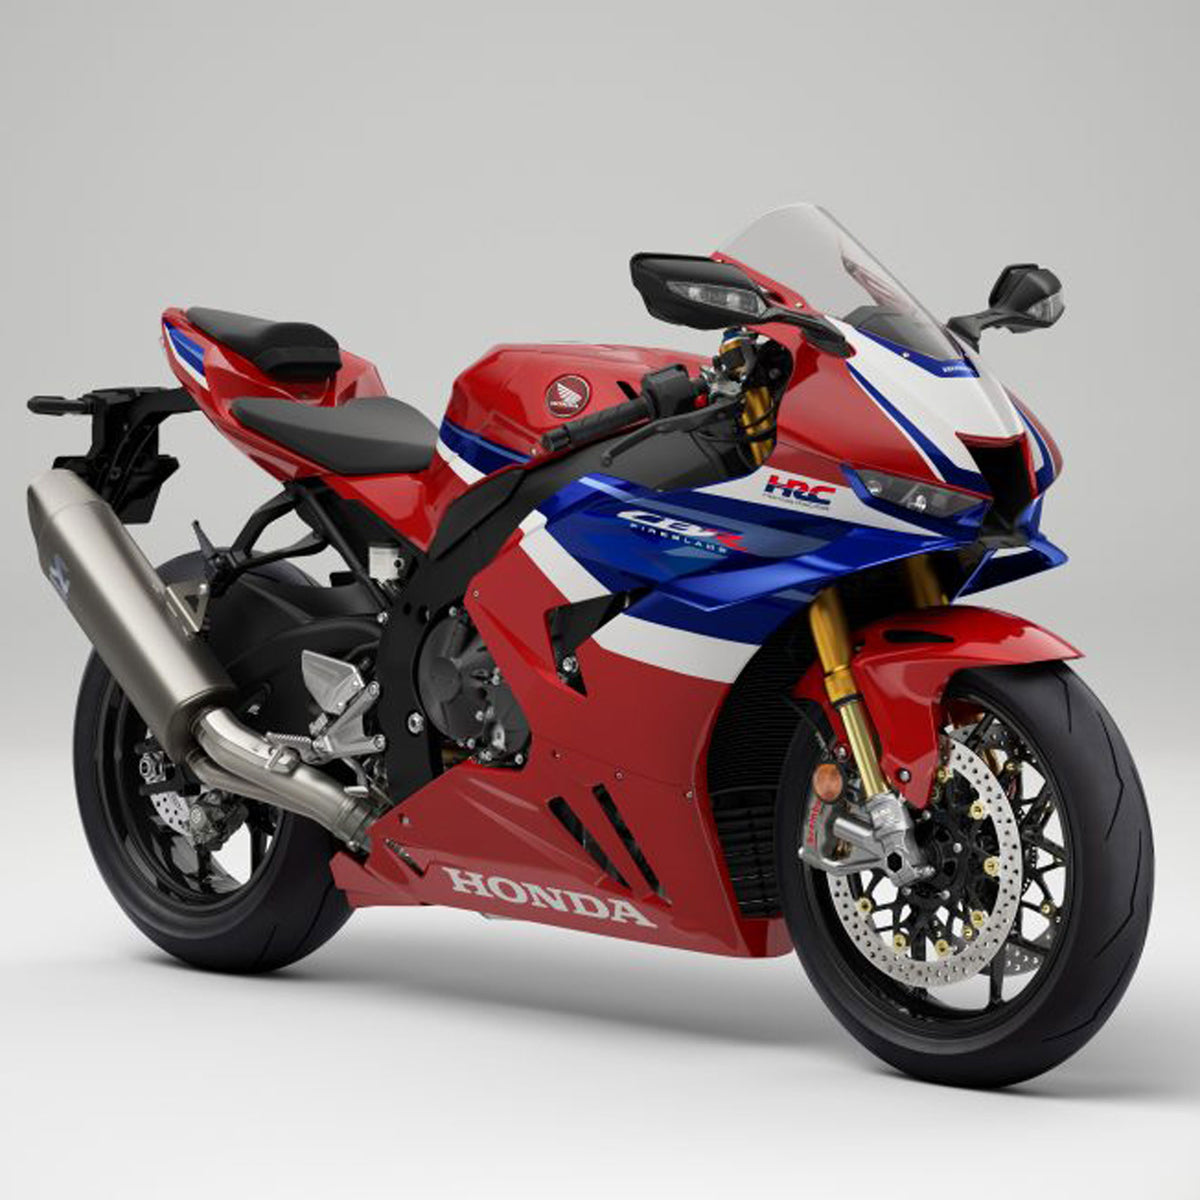 Super Sport Bikes from Honda of Bournemouth | New Honda Bikes | CBR1000RR-R Fireblade SP